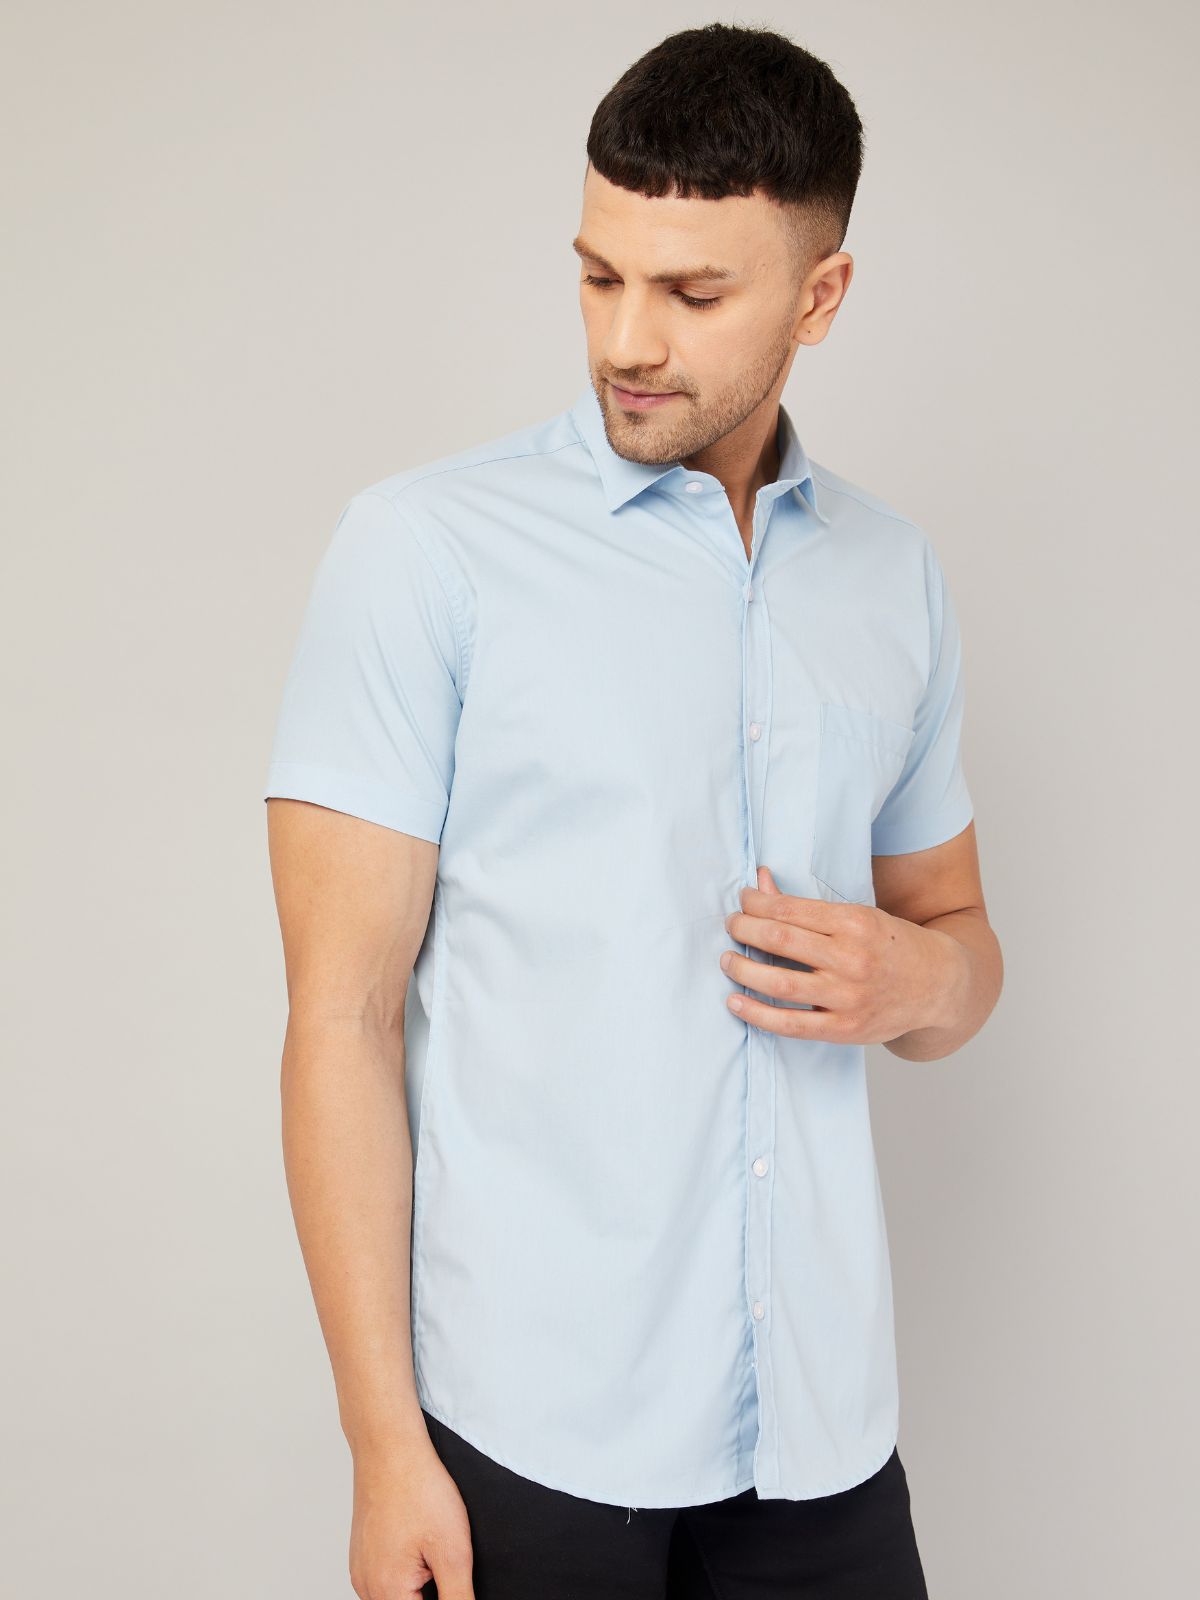 Louis Monarch Men Regular Fit Solid Sky Blue Spread Collar Casual Half Shirt